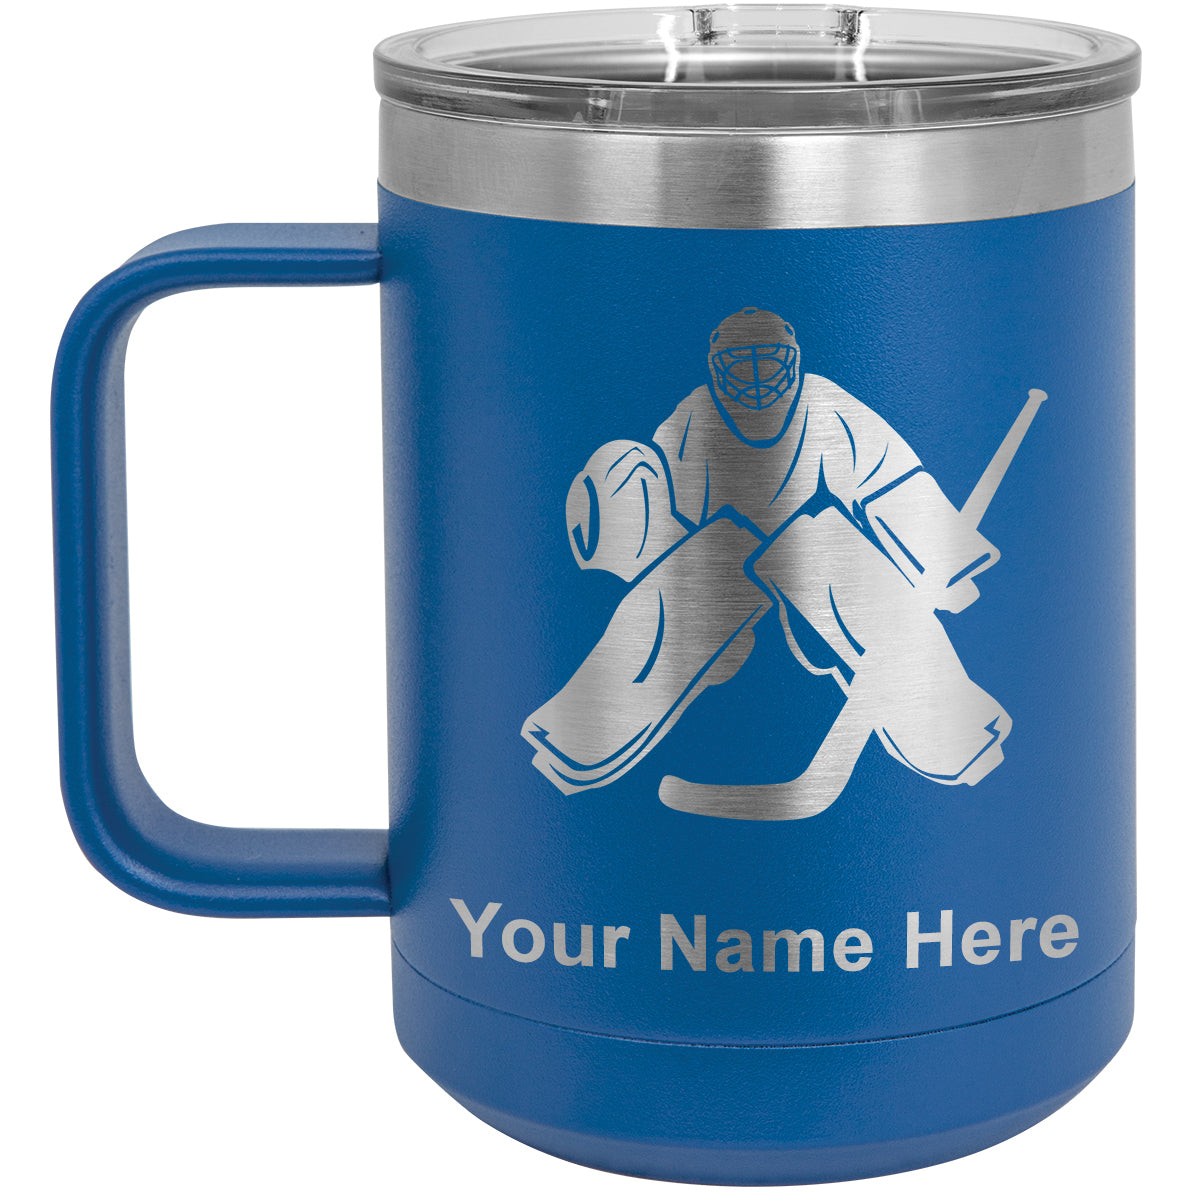 15oz Vacuum Insulated Coffee Mug, Hockey Goalie, Personalized Engraving Included